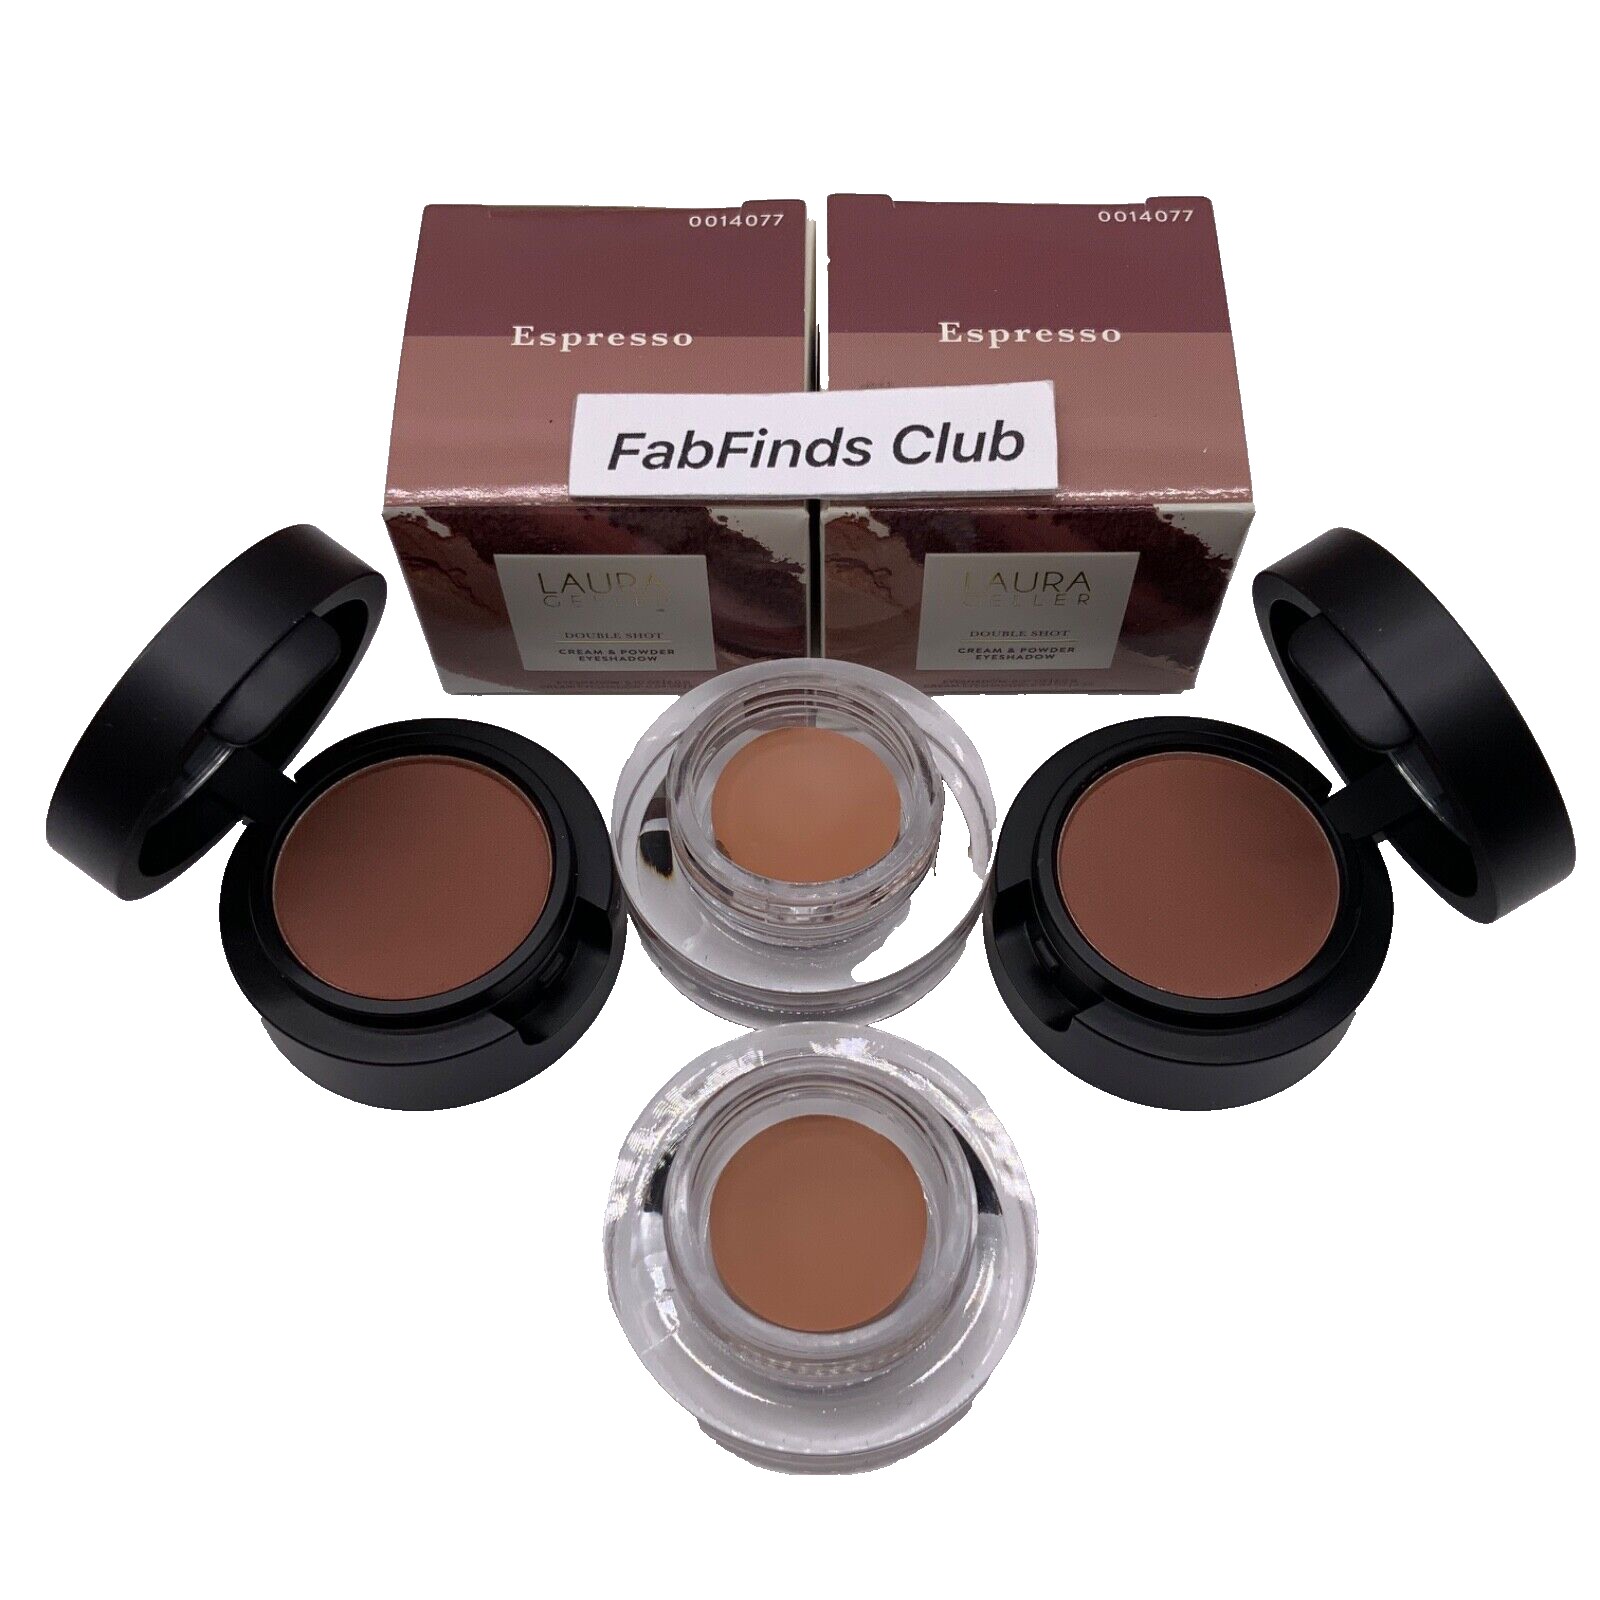 2x Laura Geller Double Shot Cream & Powder Eyeshadow Duo *Espresso* New in Bo... - $10.87